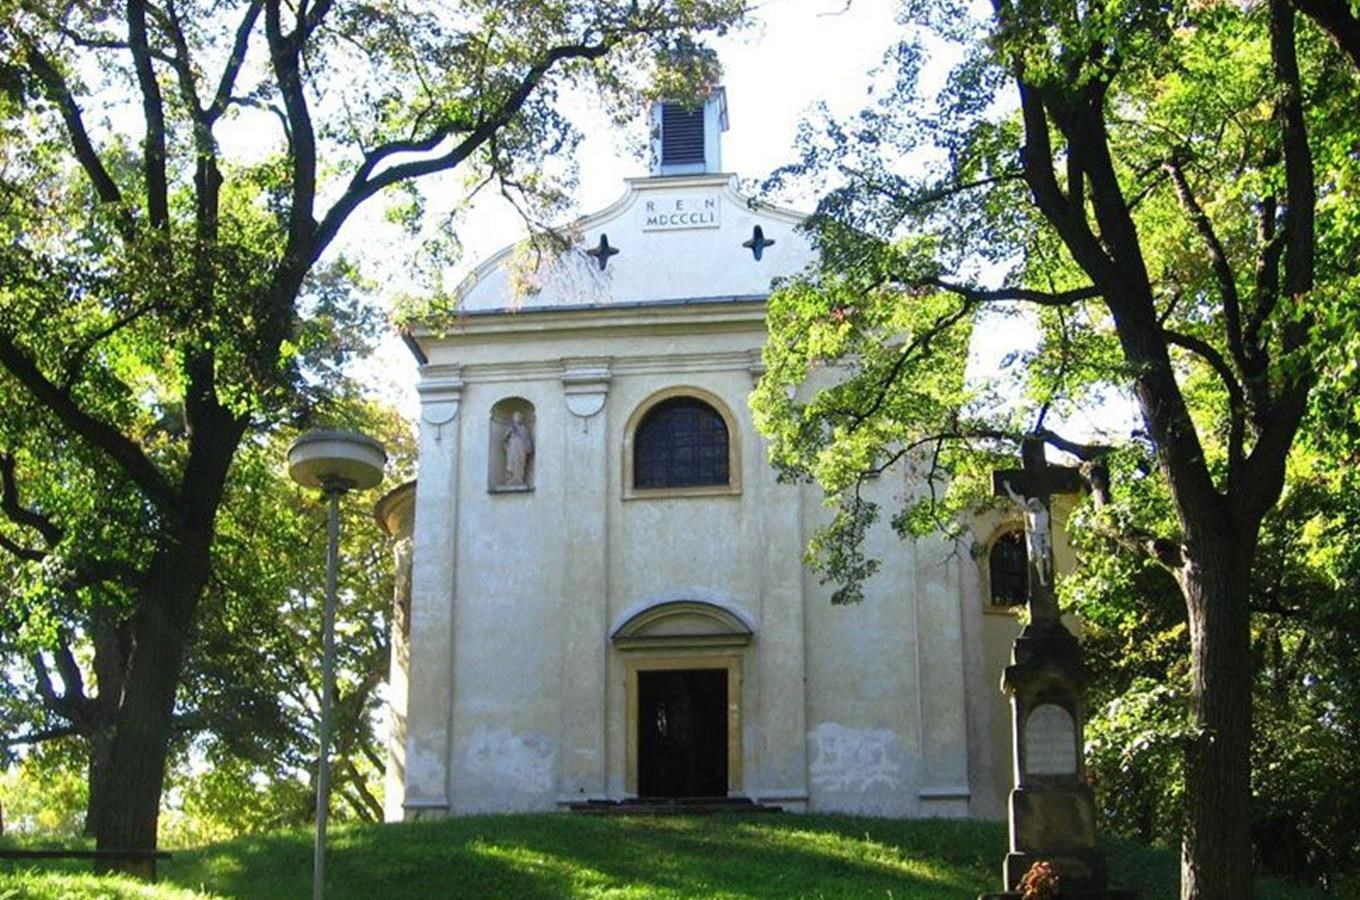 Kaple sv. Barbory v Kloboukách u Brna